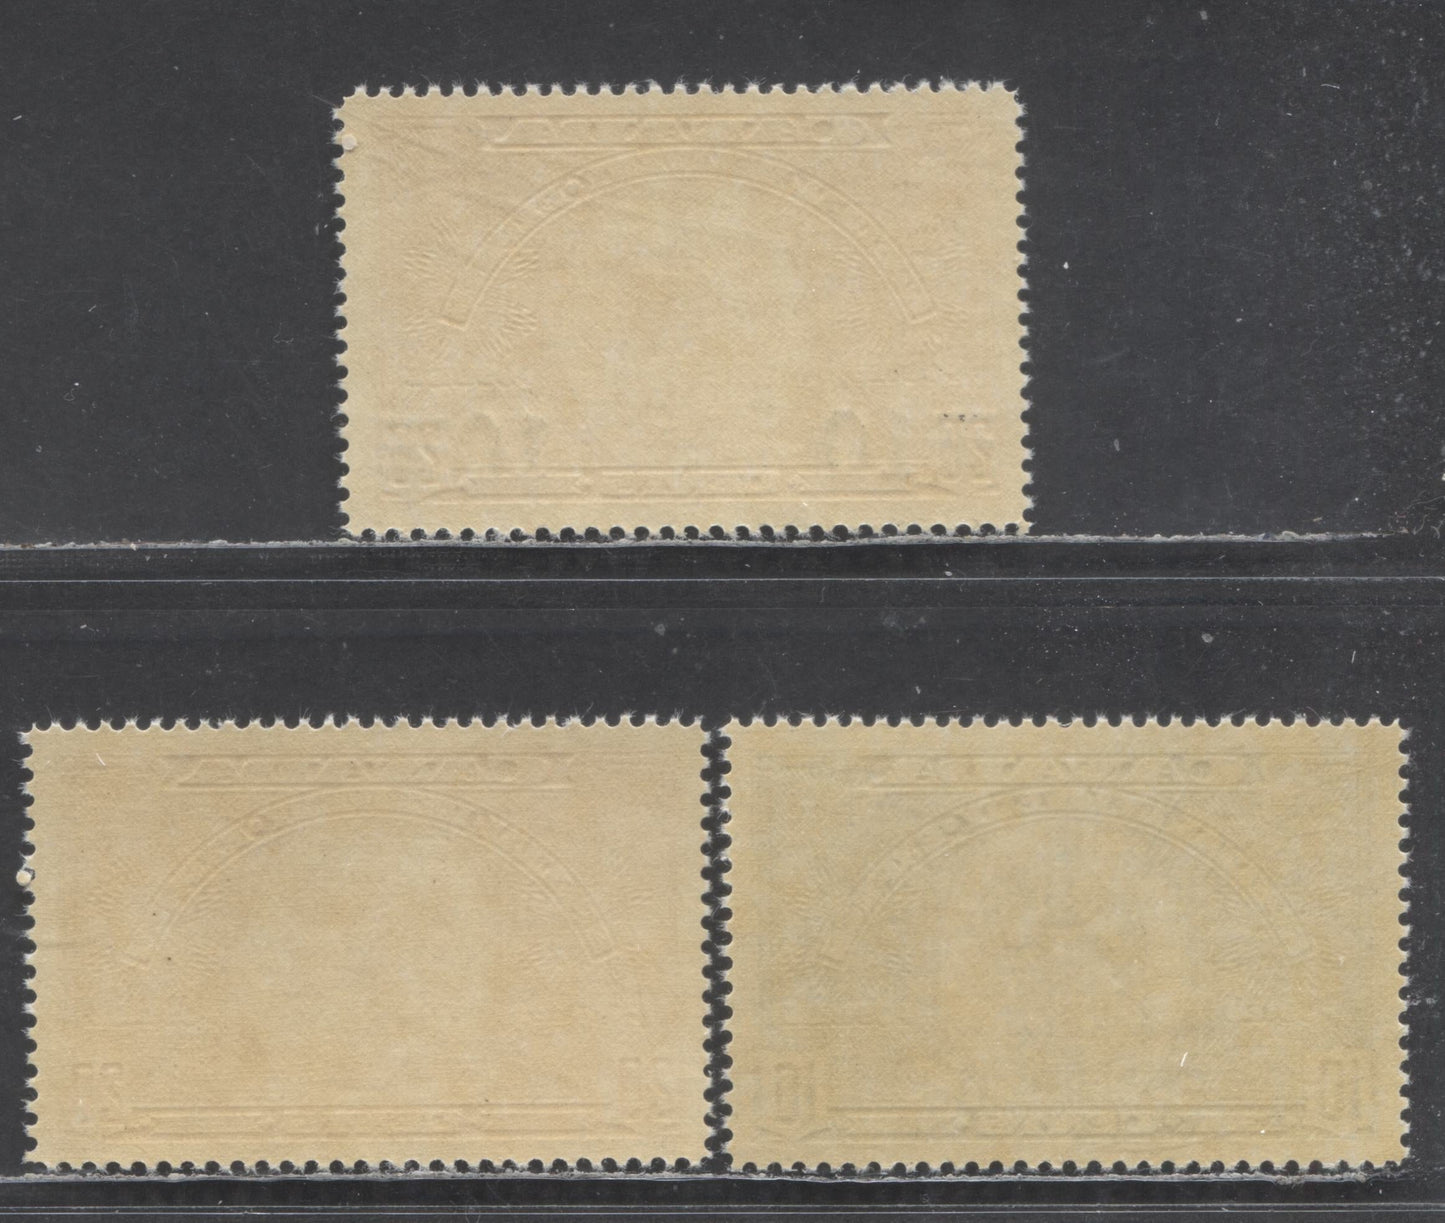 Lot 73 Canada #E7-E9 10c, 20c & 10c on 20c Dark Green & Dark Carmine, 1938-1939 Special Delivery Issue, 3 F/VFNH Singles On Vertical Wove Paper With Cream Gum